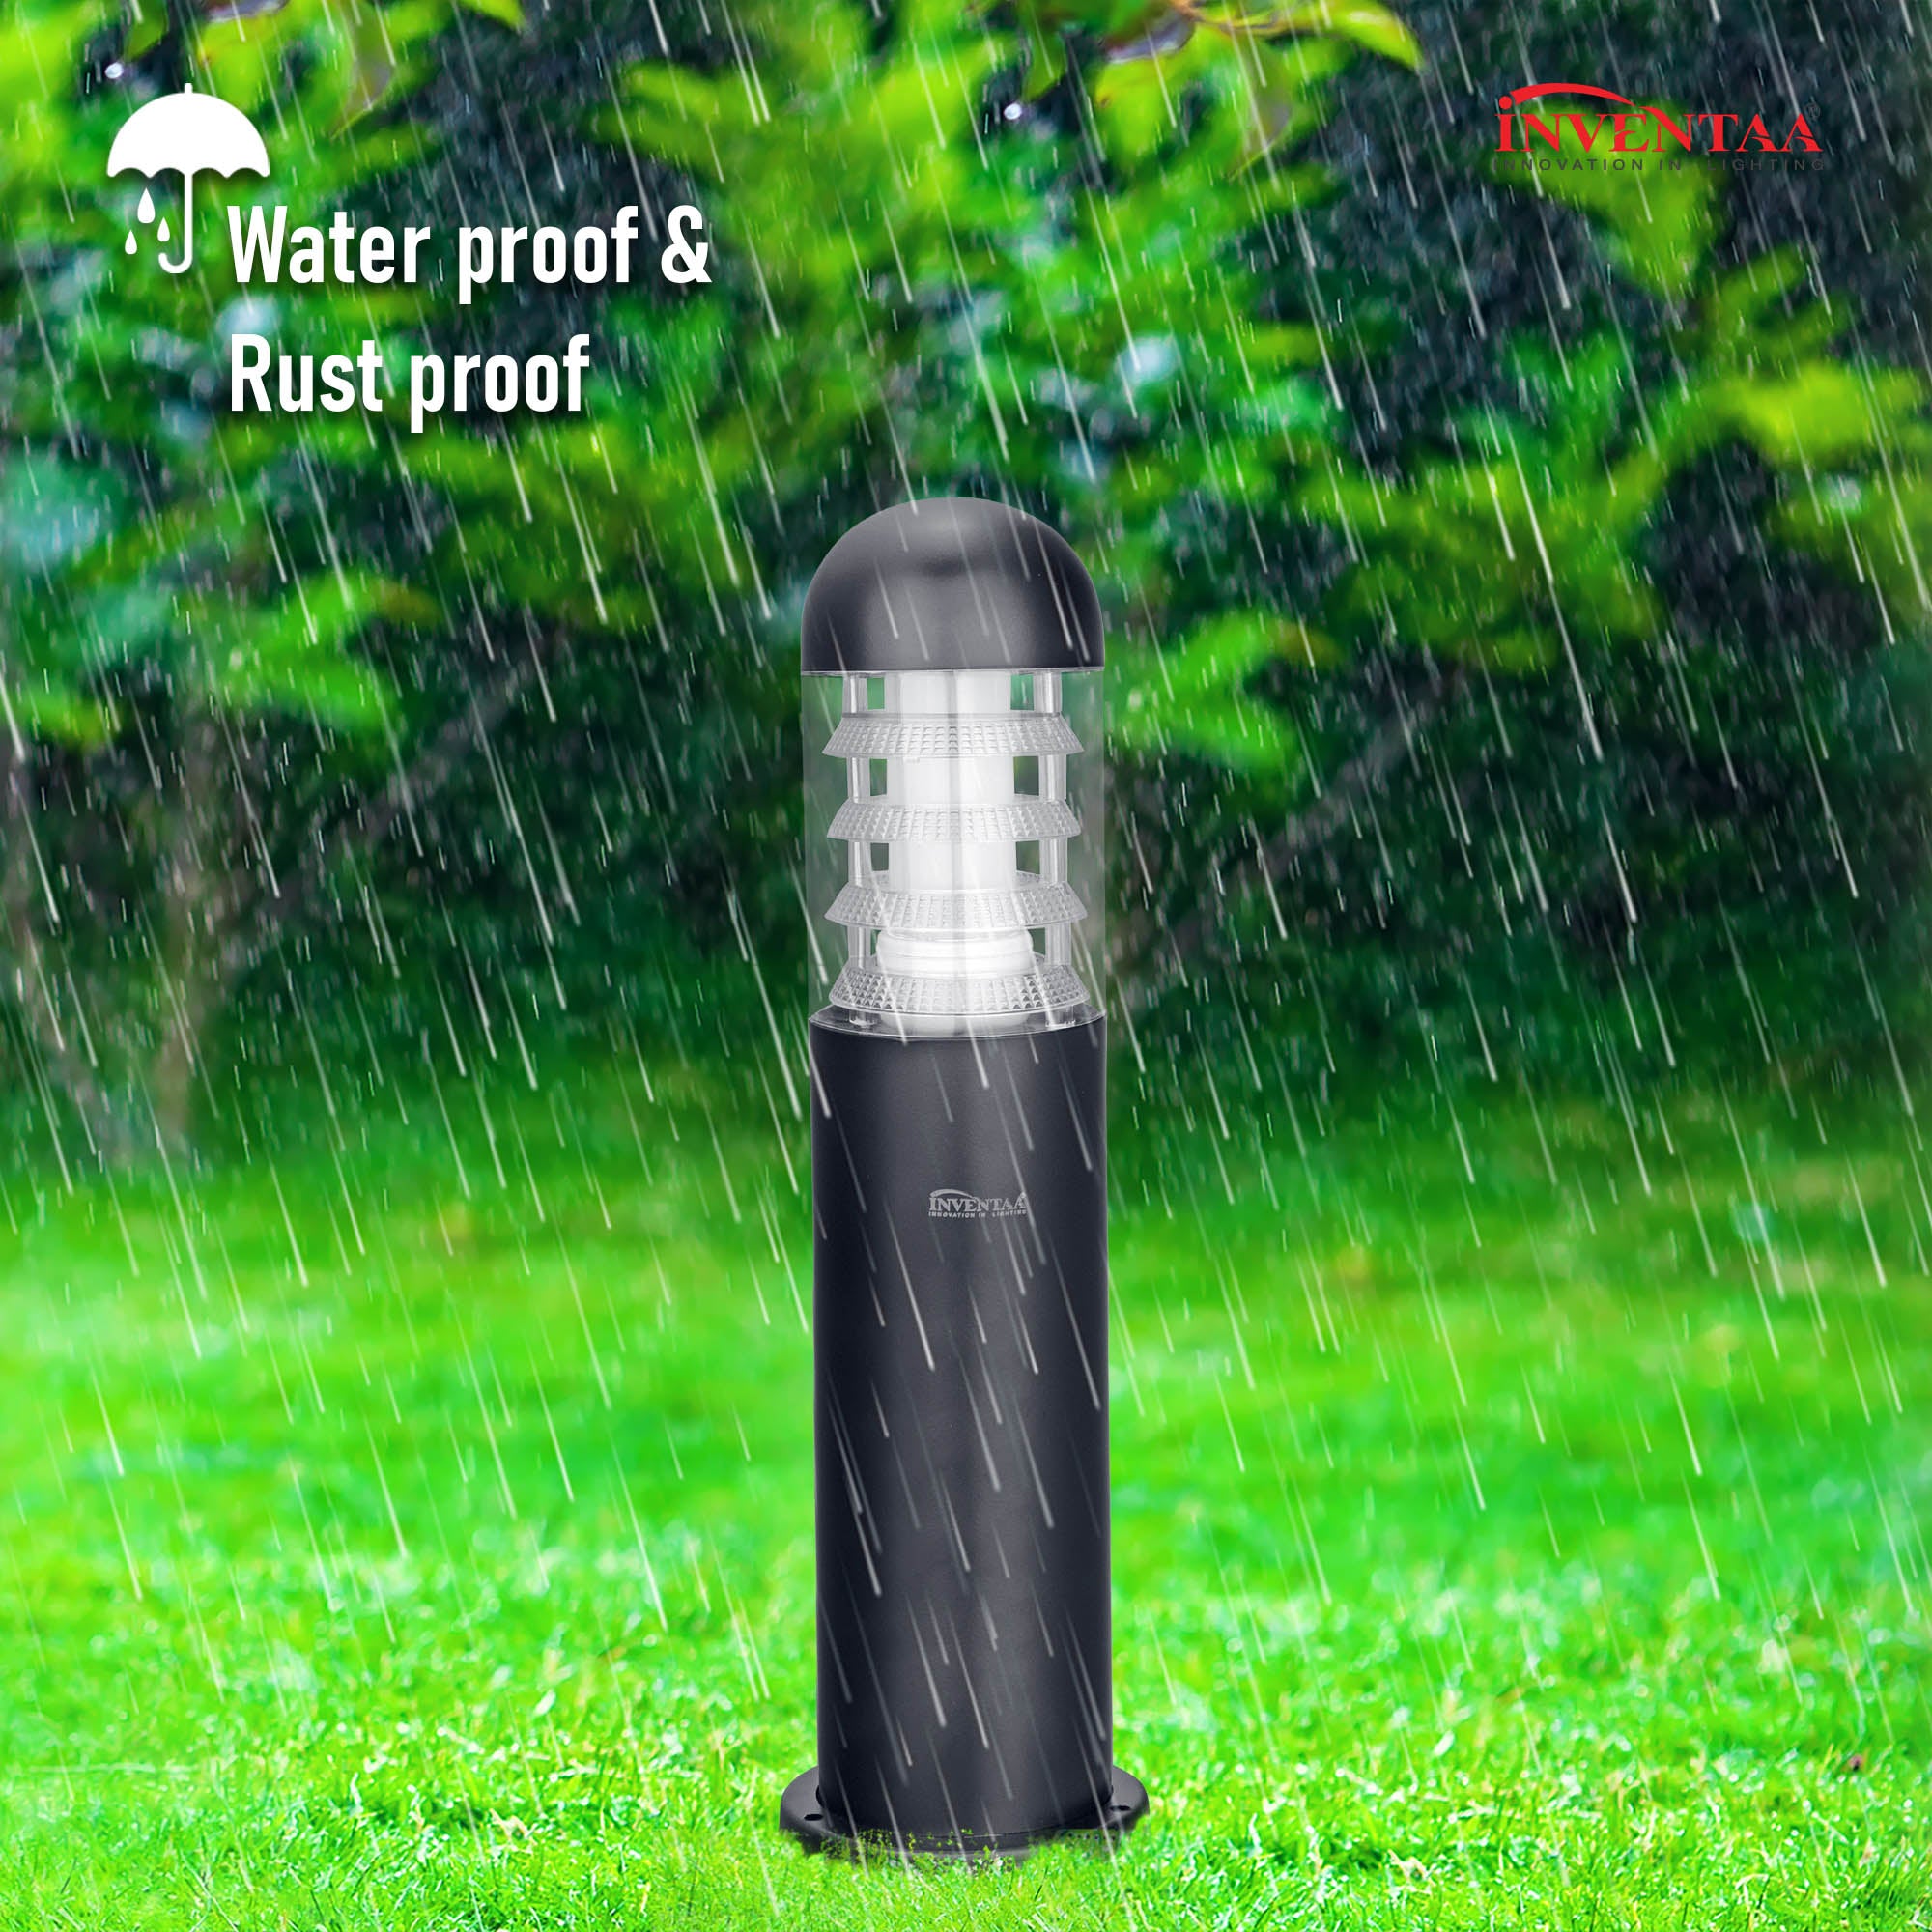 Electra 1.5 feet led garden bollard light featuring its waterproof resistance for outdoor use #size_1.5 feet